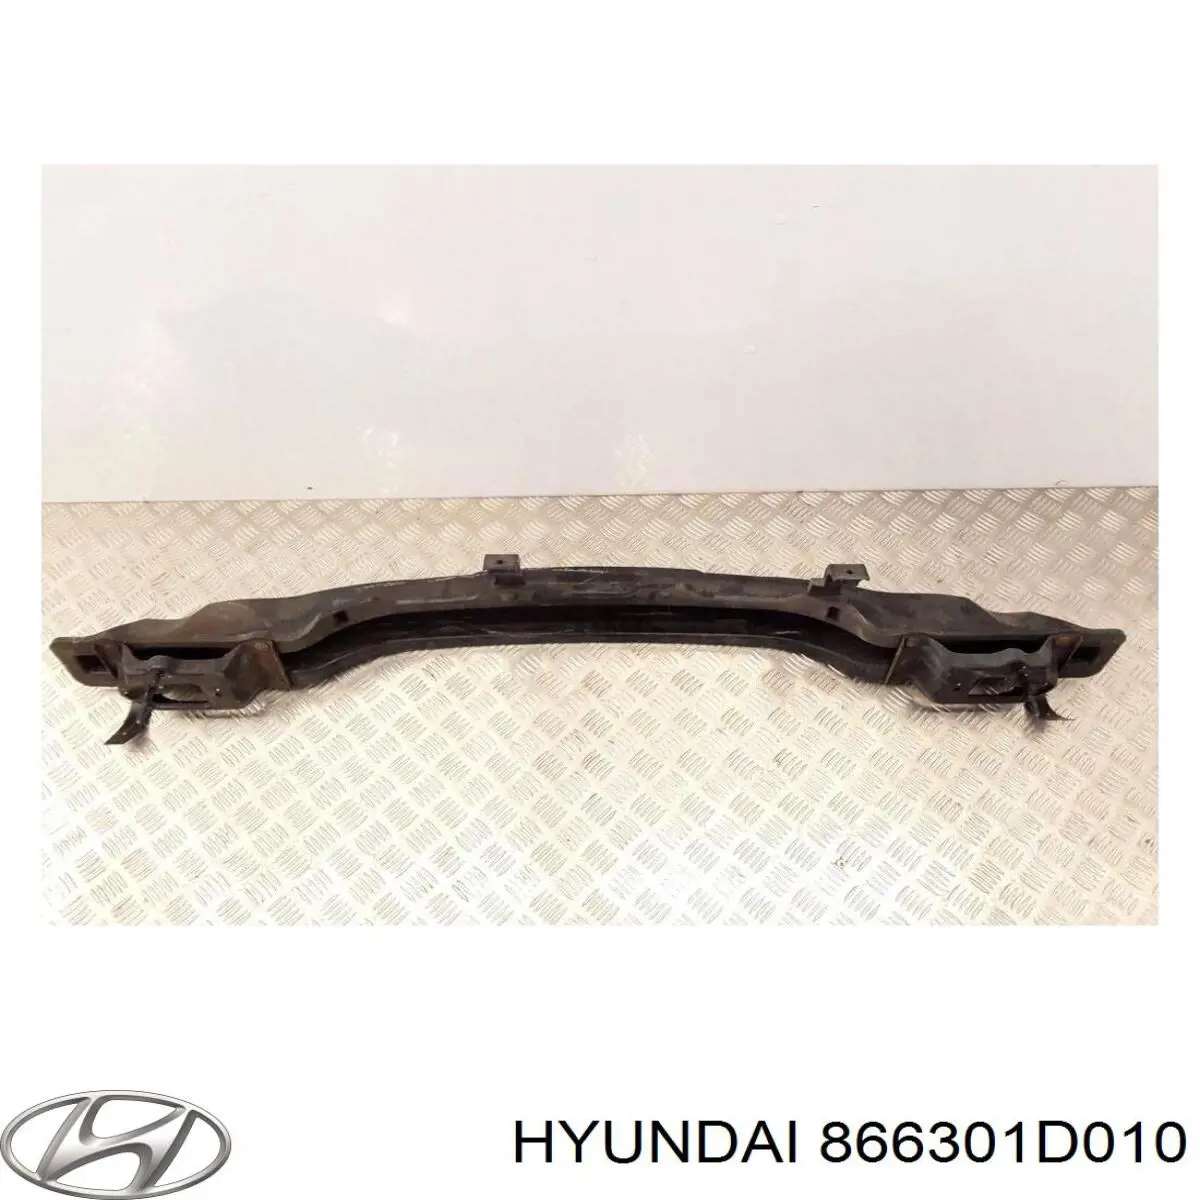 866301D010 Hyundai/Kia refuerzo parachoques trasero